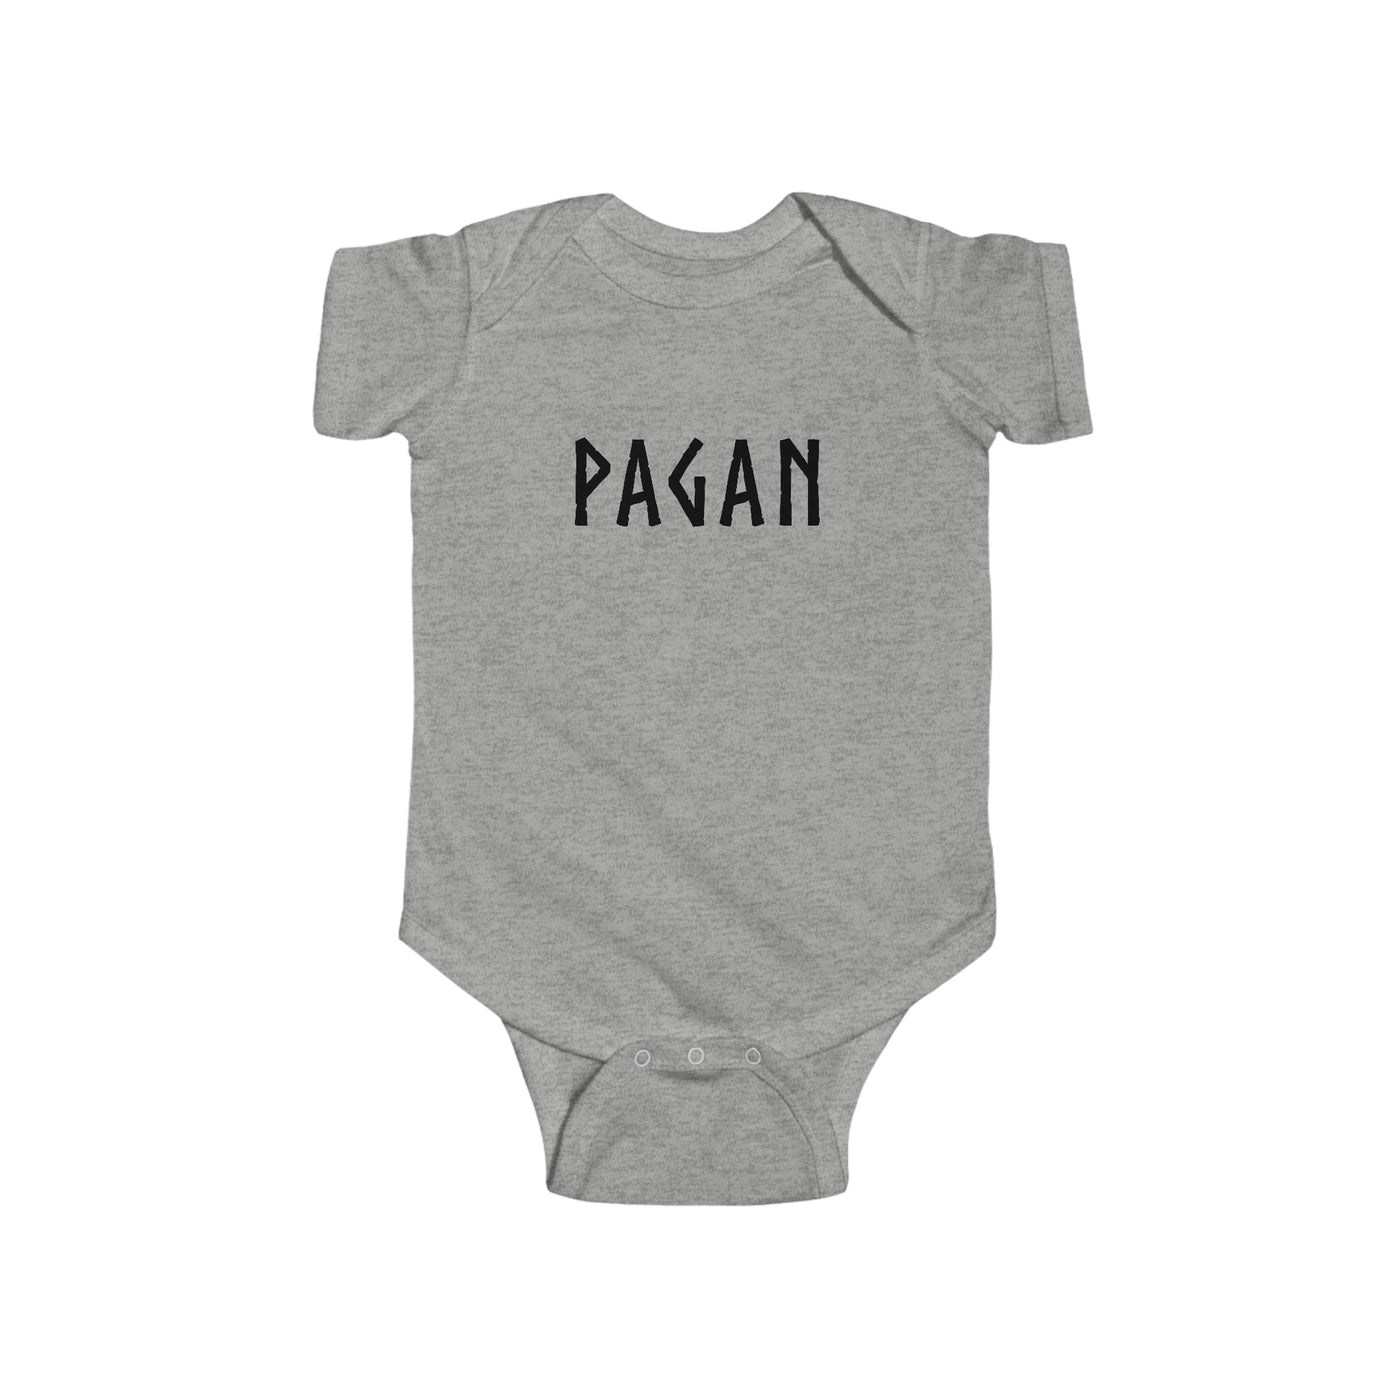 Pagan Baby Bodysuit